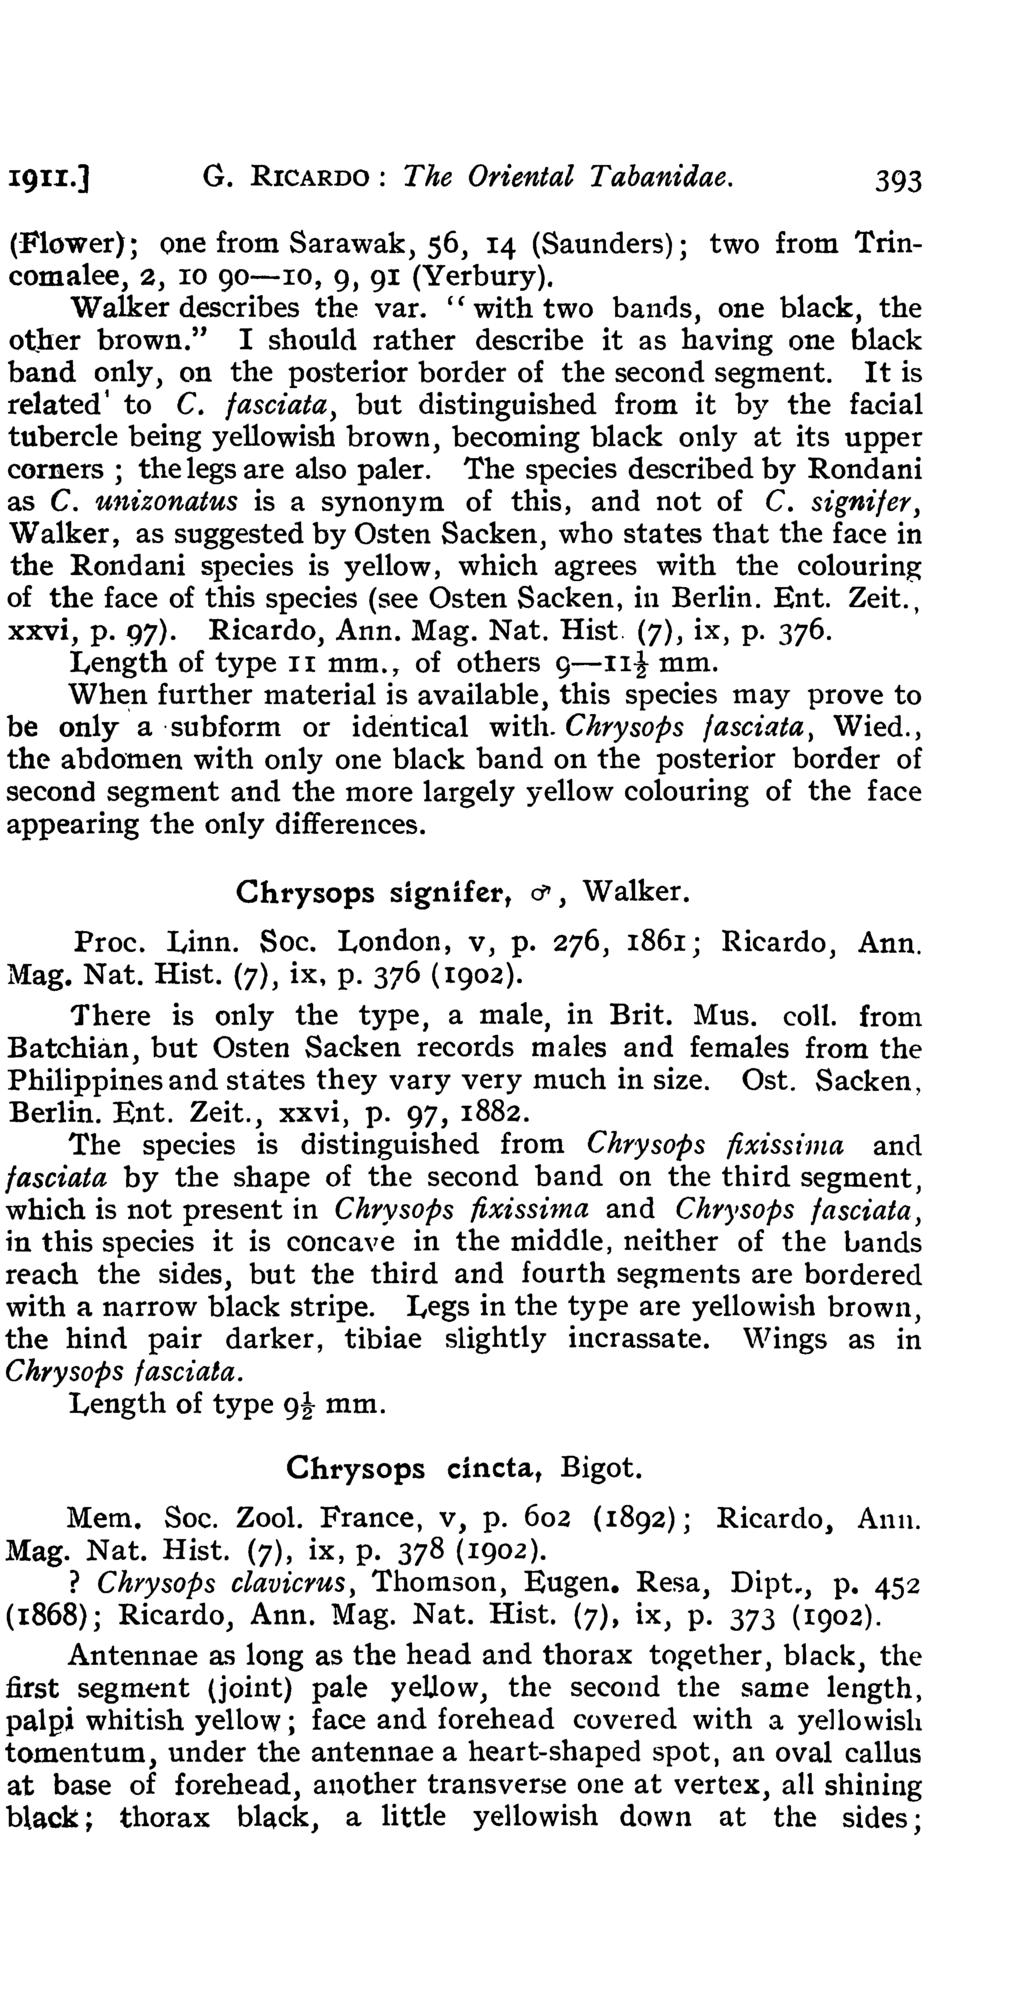 1911:.] G. RICARDO: The Oriental Tabanidae. 393 (Flower); one from Sarawak, 56, 14 (Saunders); two from Trincomalee, 2, 10 go-10, 9, 91 (Yerbury). Walker describes the var.